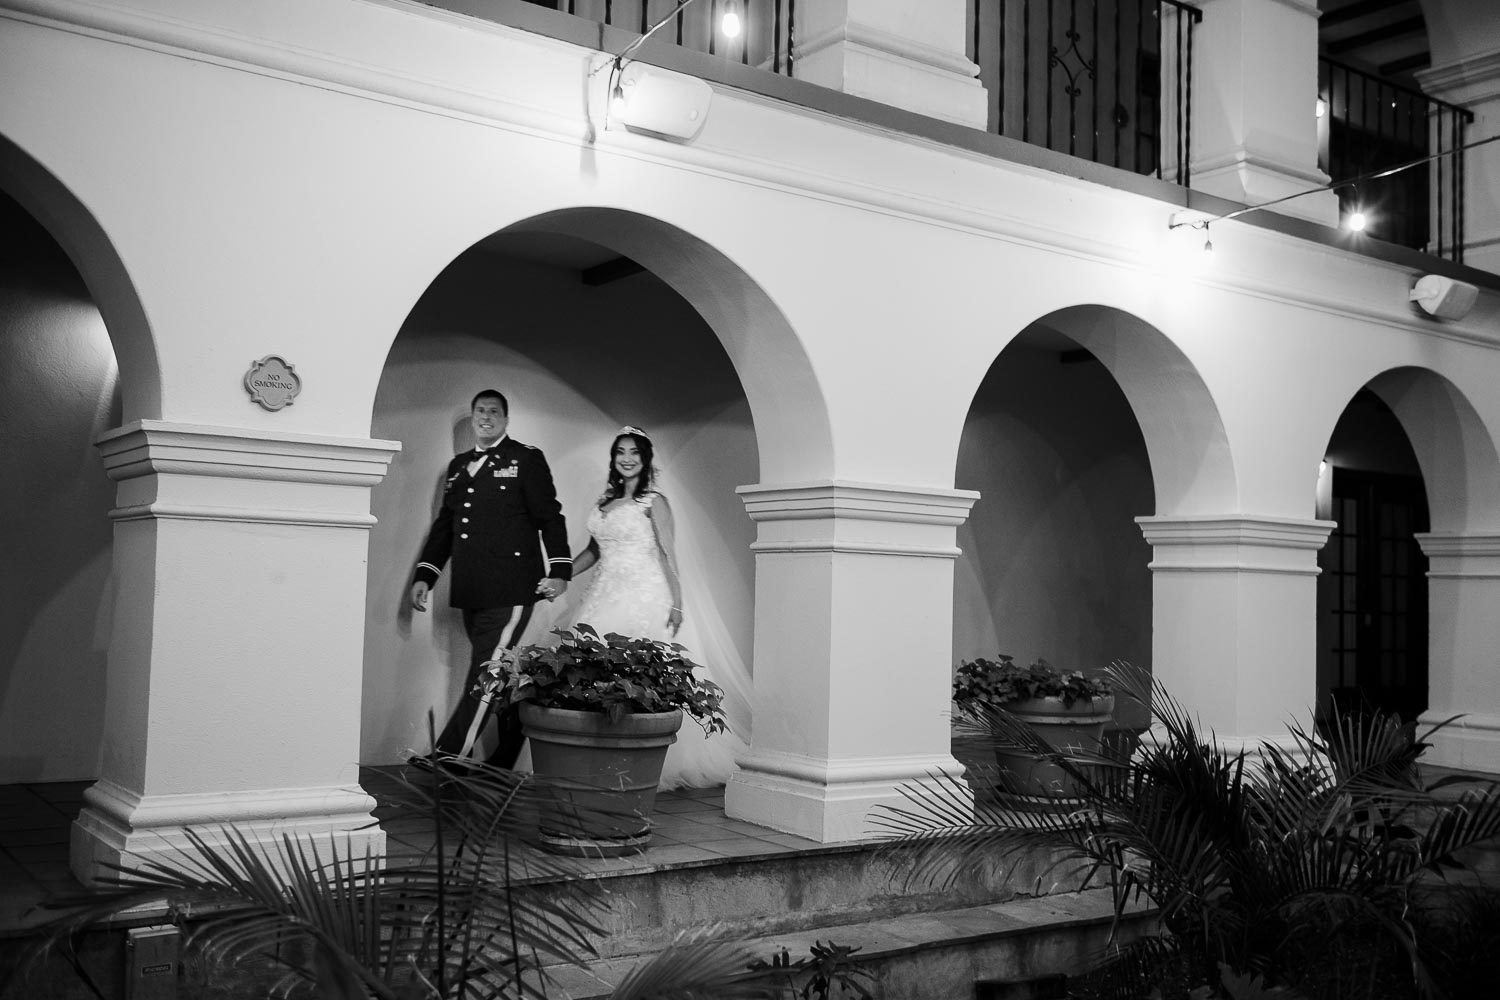 The couple stride through the arches at Omni La Mansion Riverwalk hotel in San Antonio Texas on their wedding day